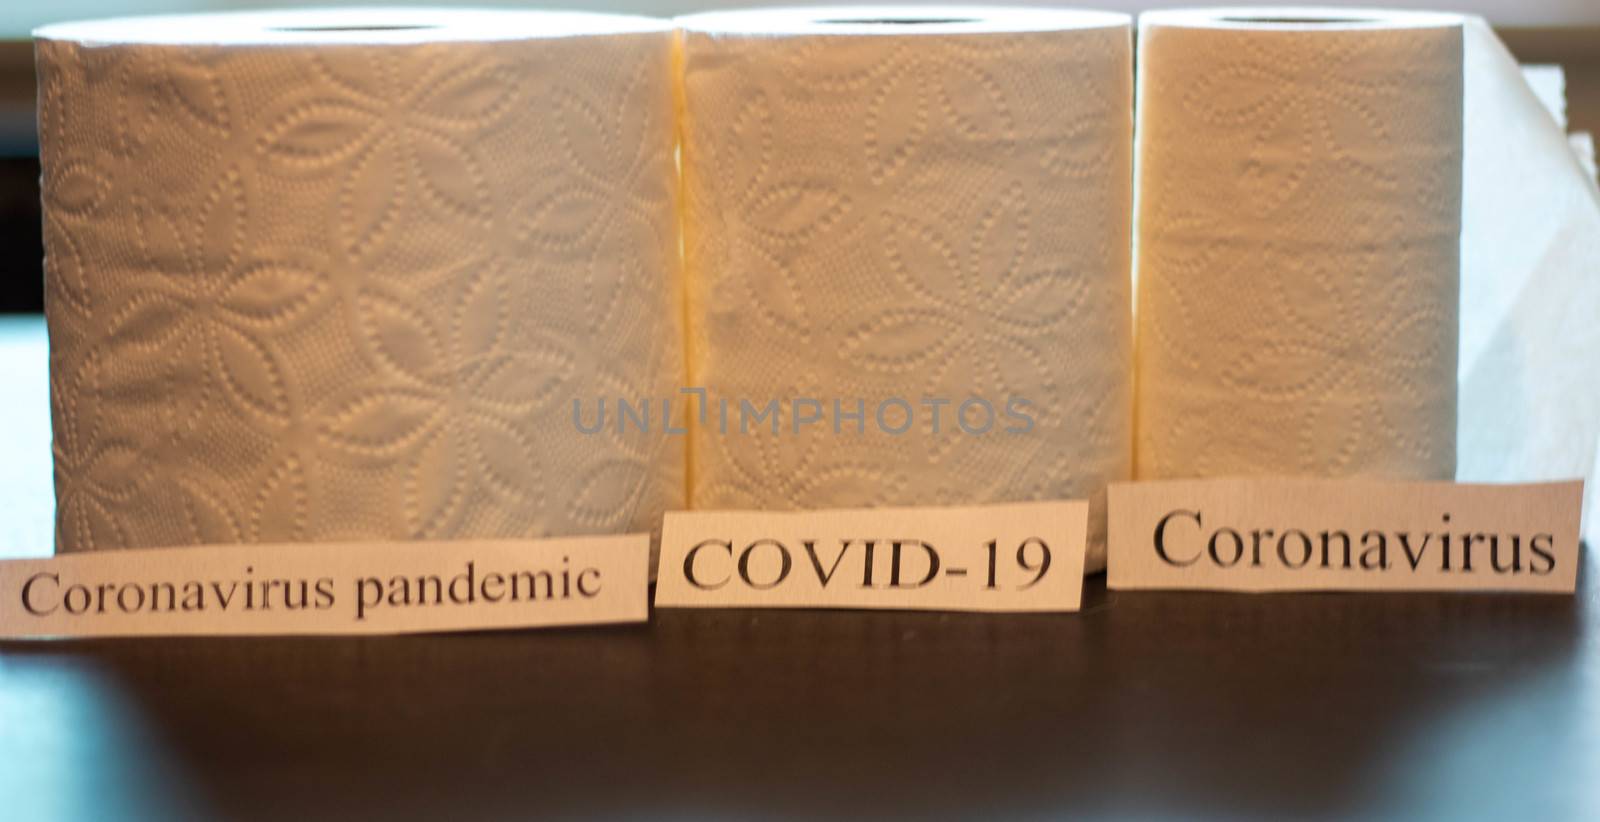 Coronavirus next to rolls of toilet paper. Theme of stocking up on supplies by mynewturtle1